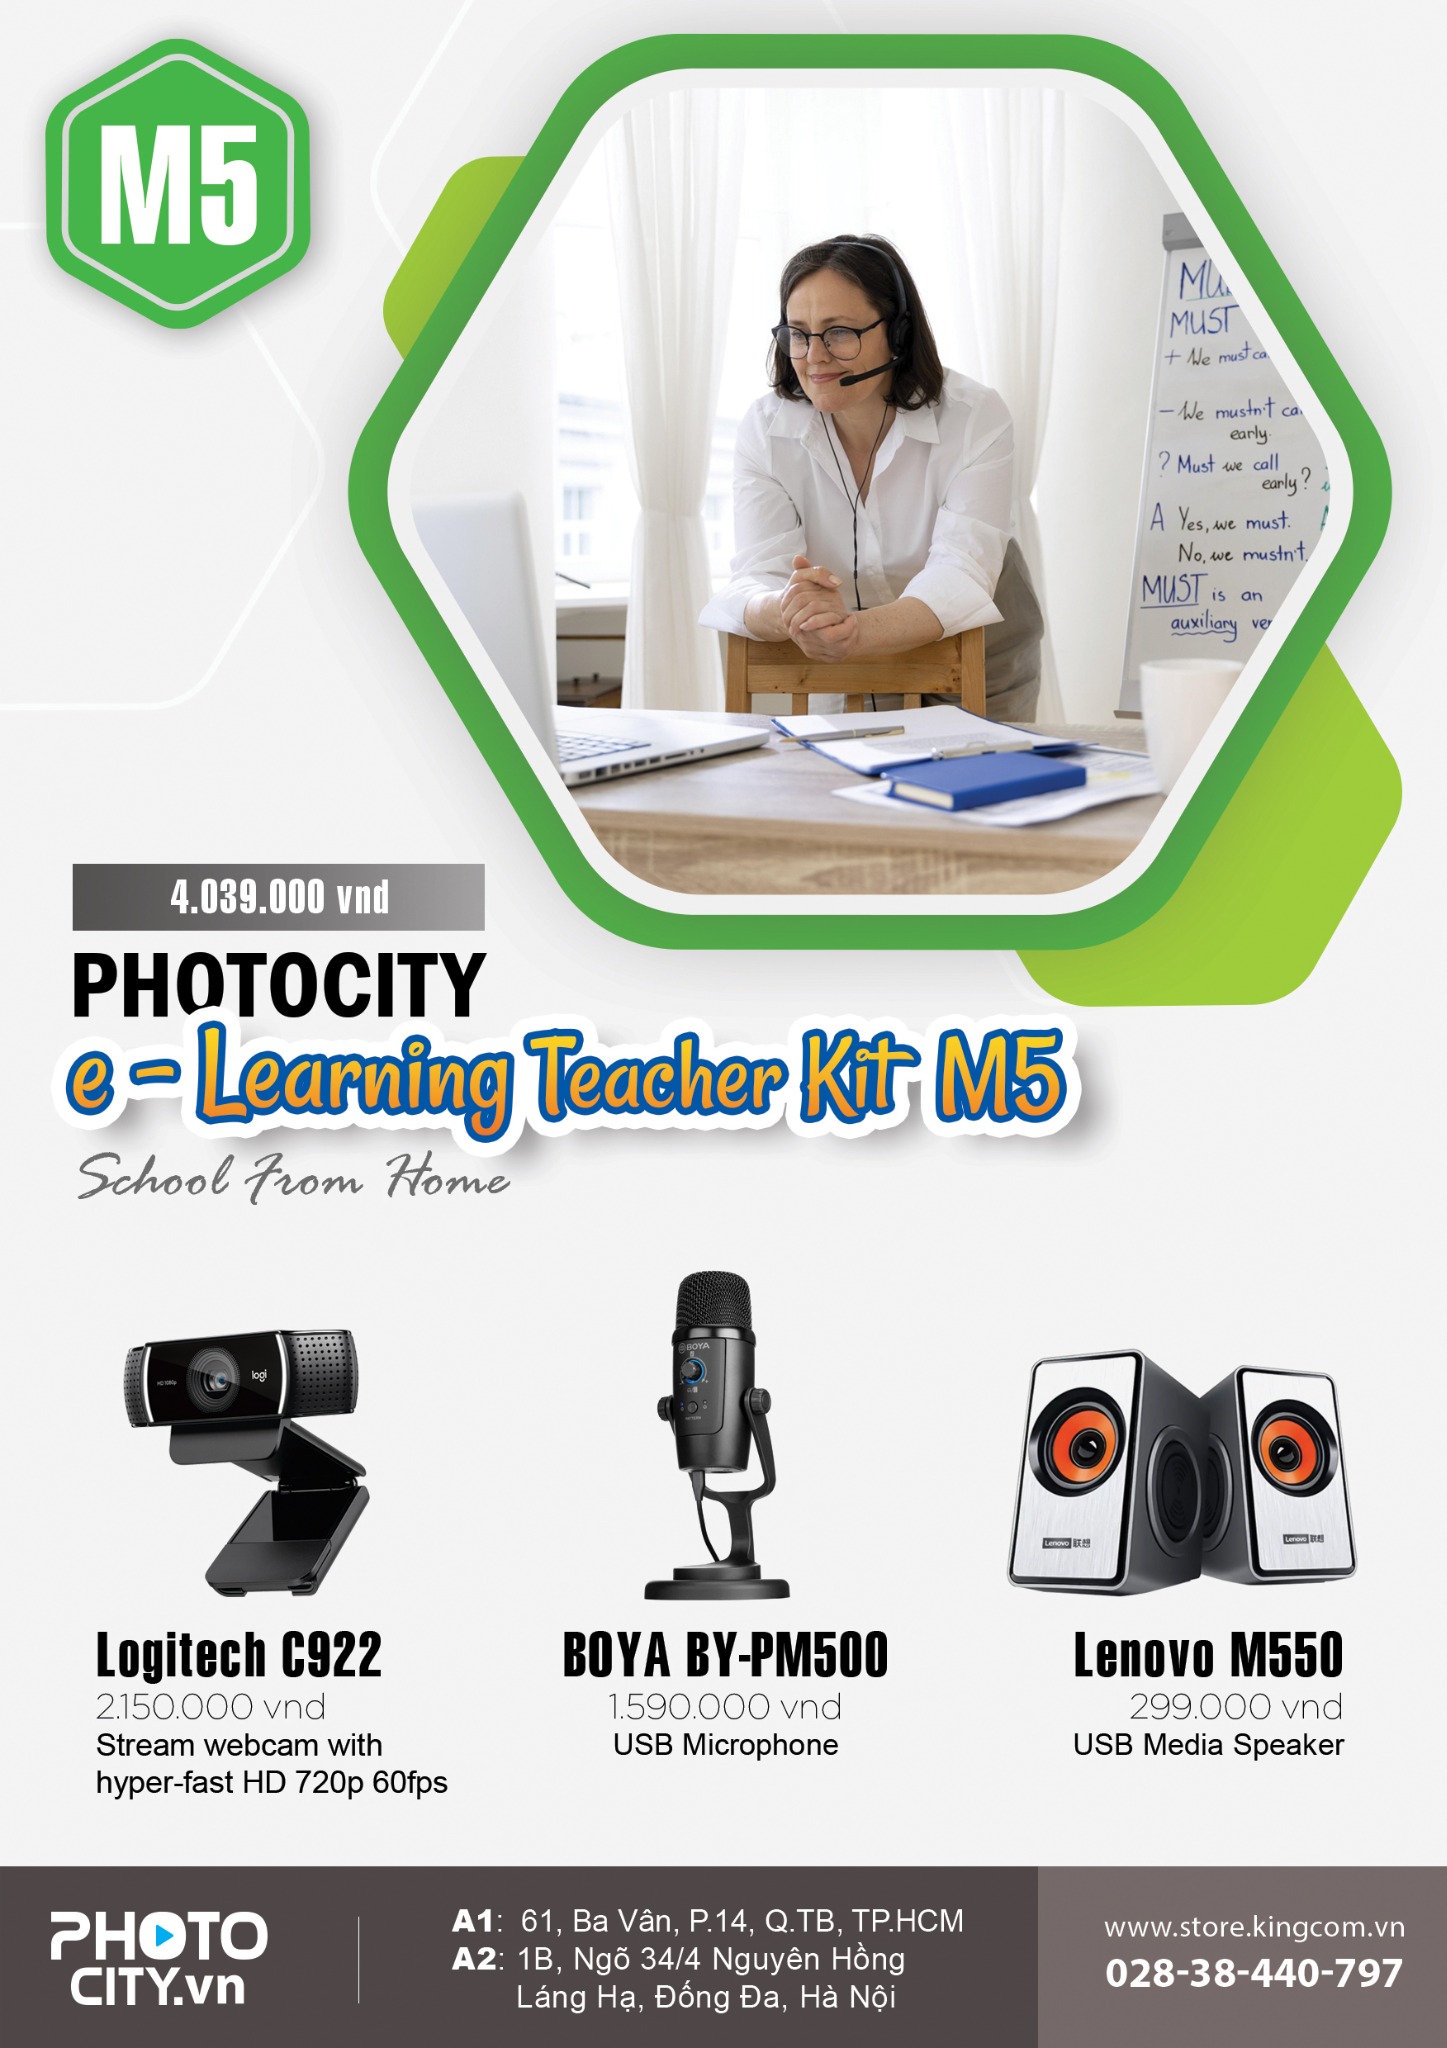 PhotoCity e -learning Teacher Kit M5 (Bộ dụng cụ dạy học online)